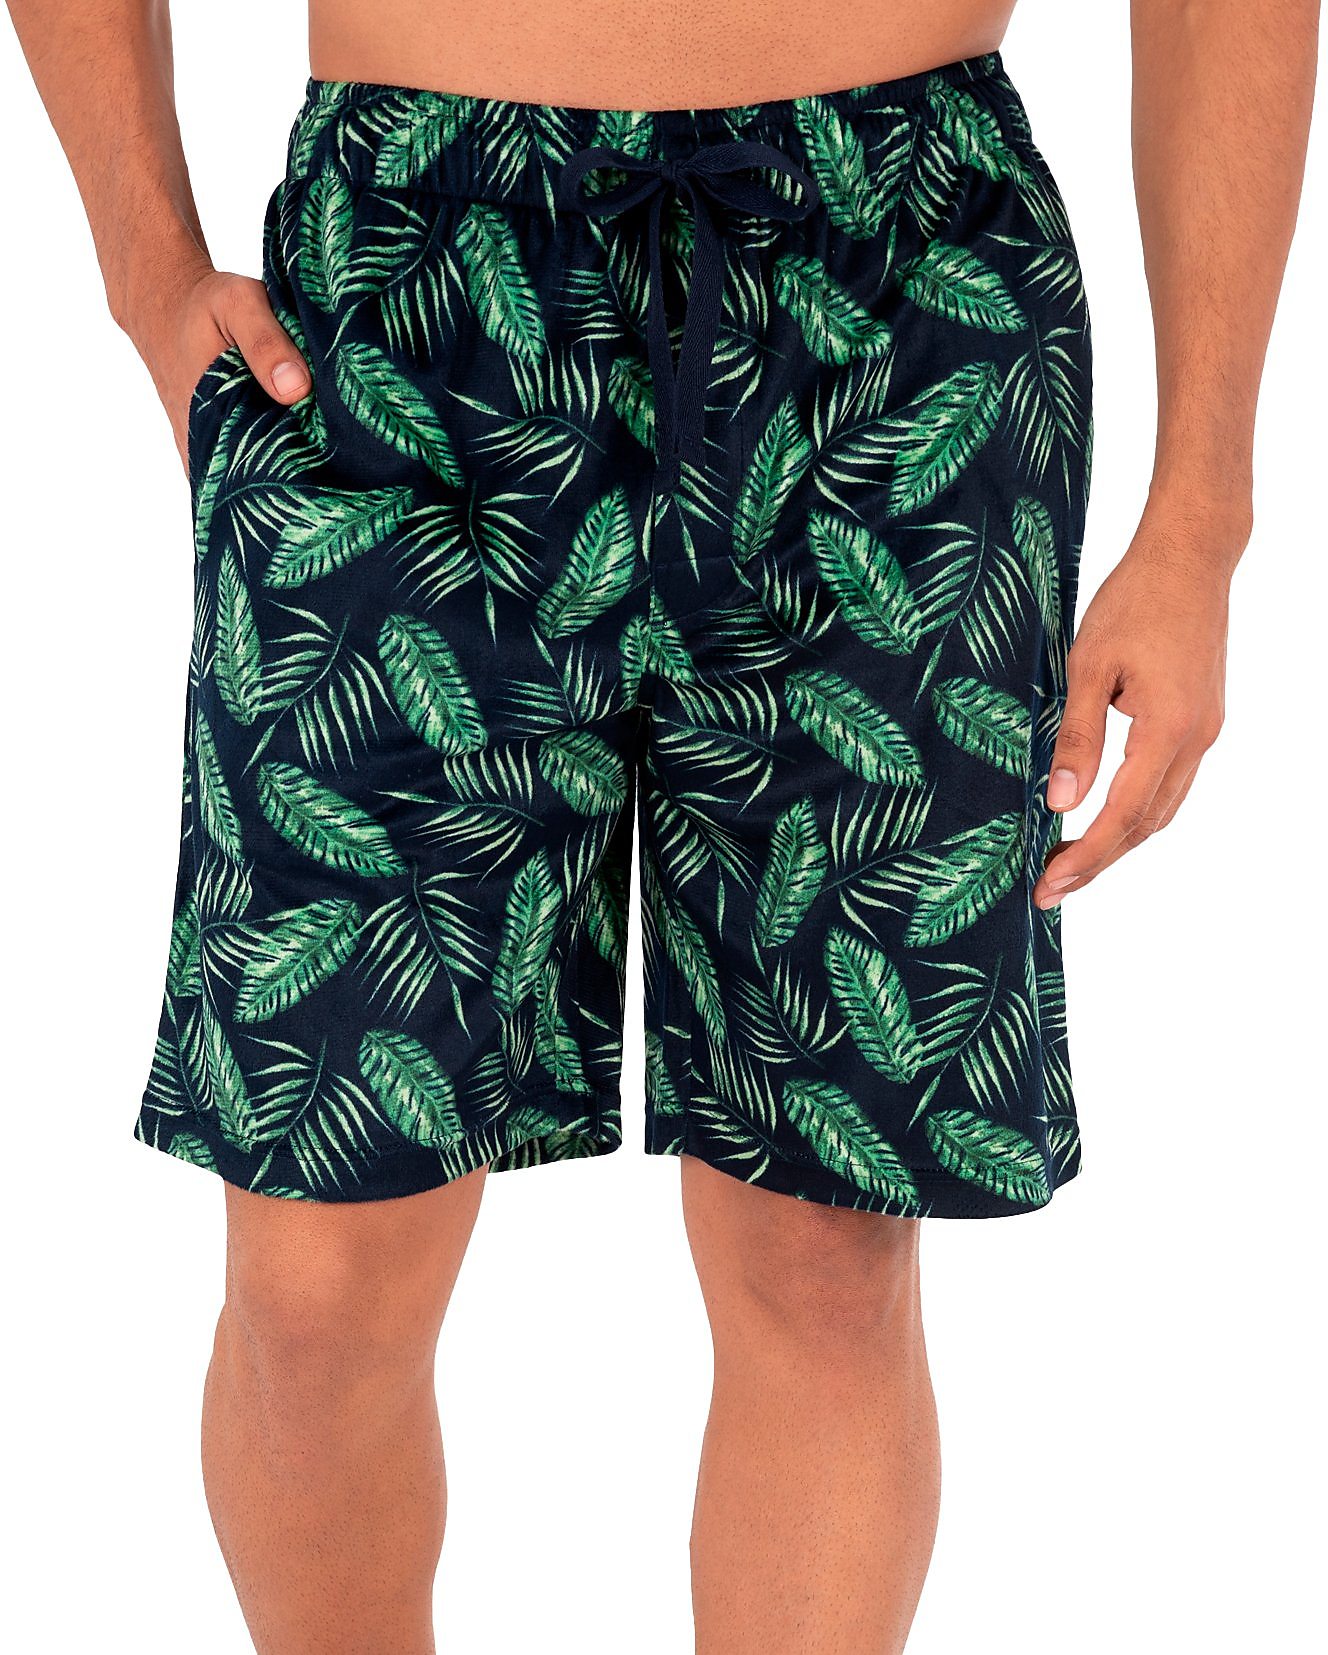 IZOD Mens Palm Leaf Sleep Shorts | eBay